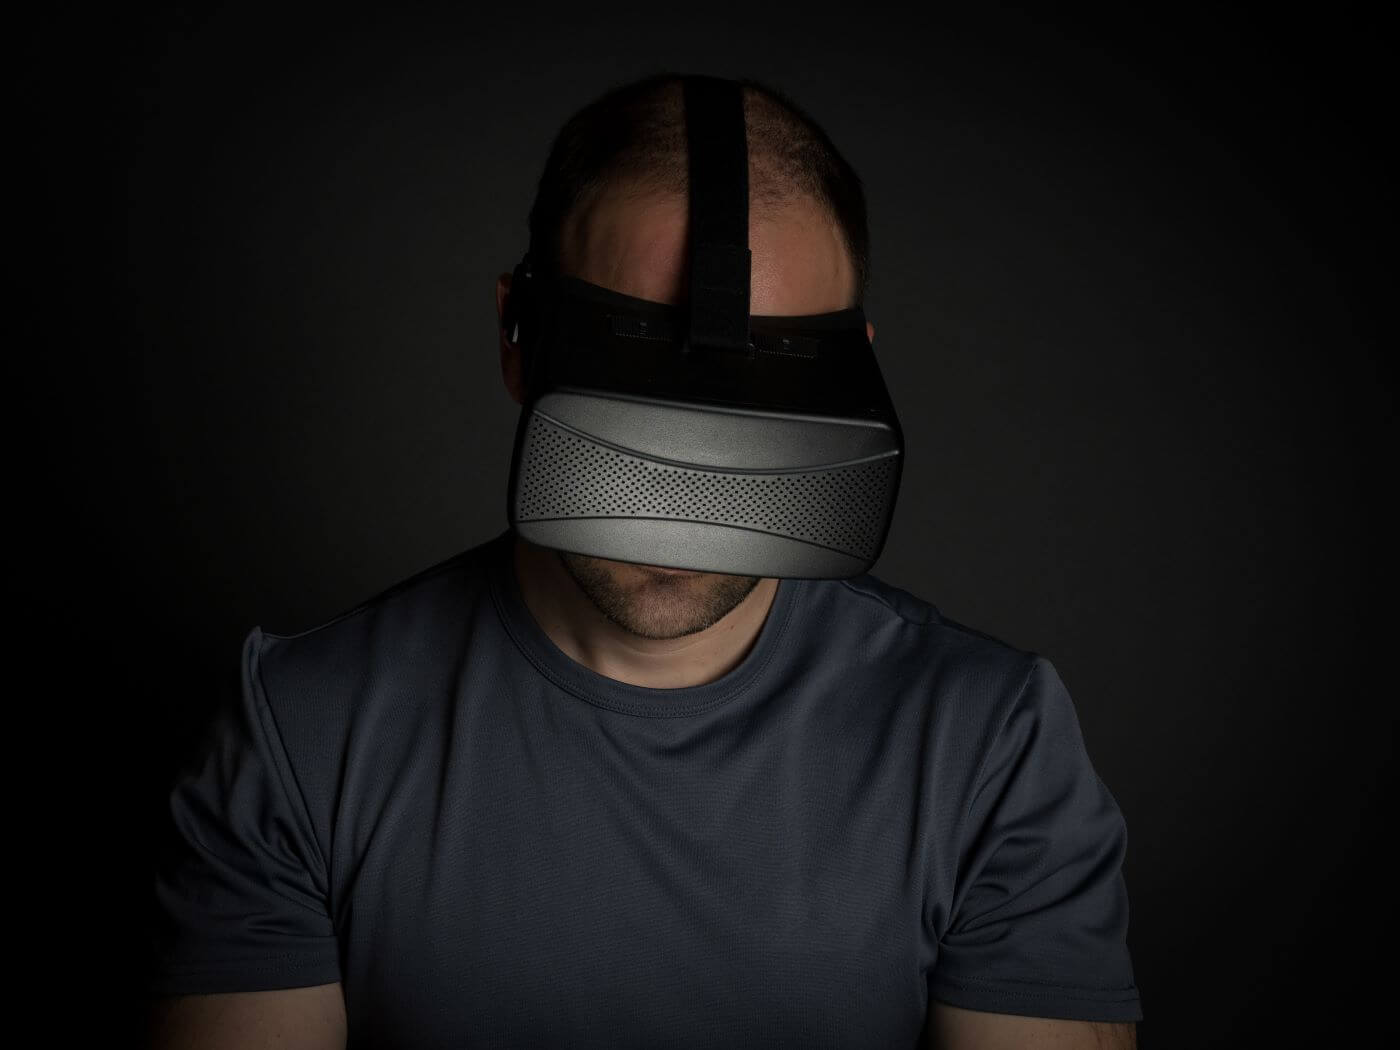 Virtual Reality Depression